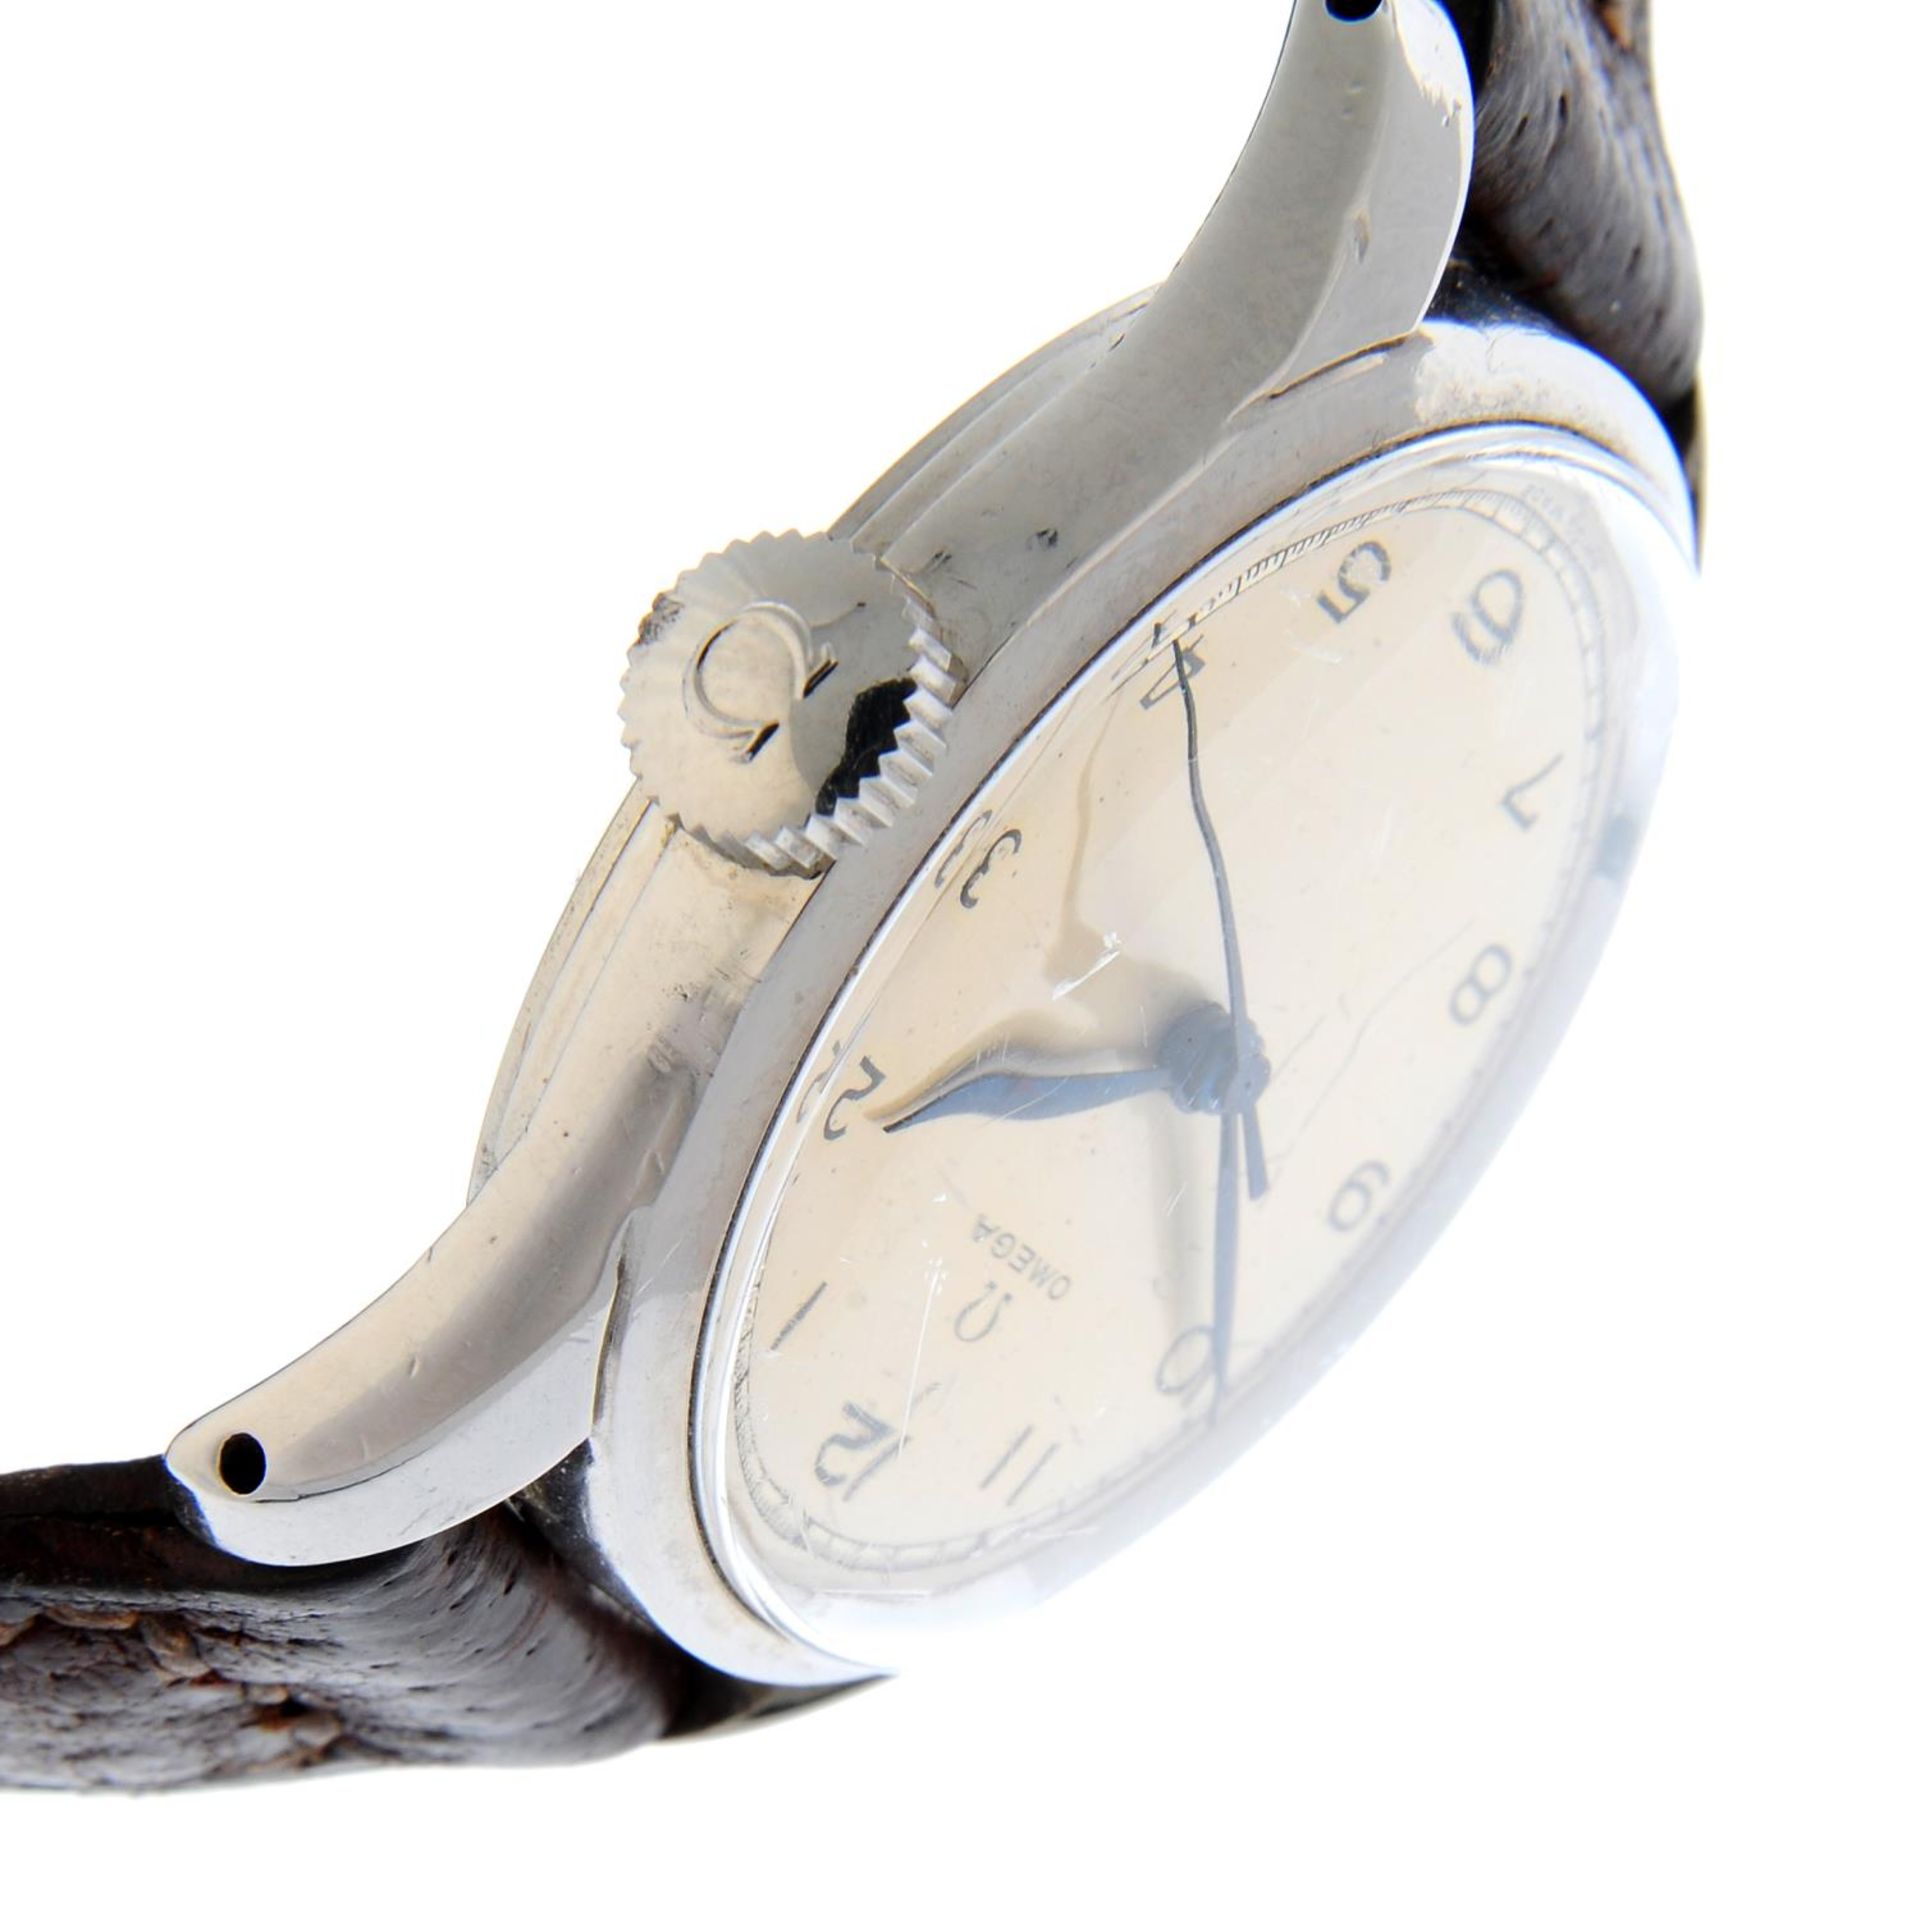 OMEGA - a wrist watch. - Image 3 of 4